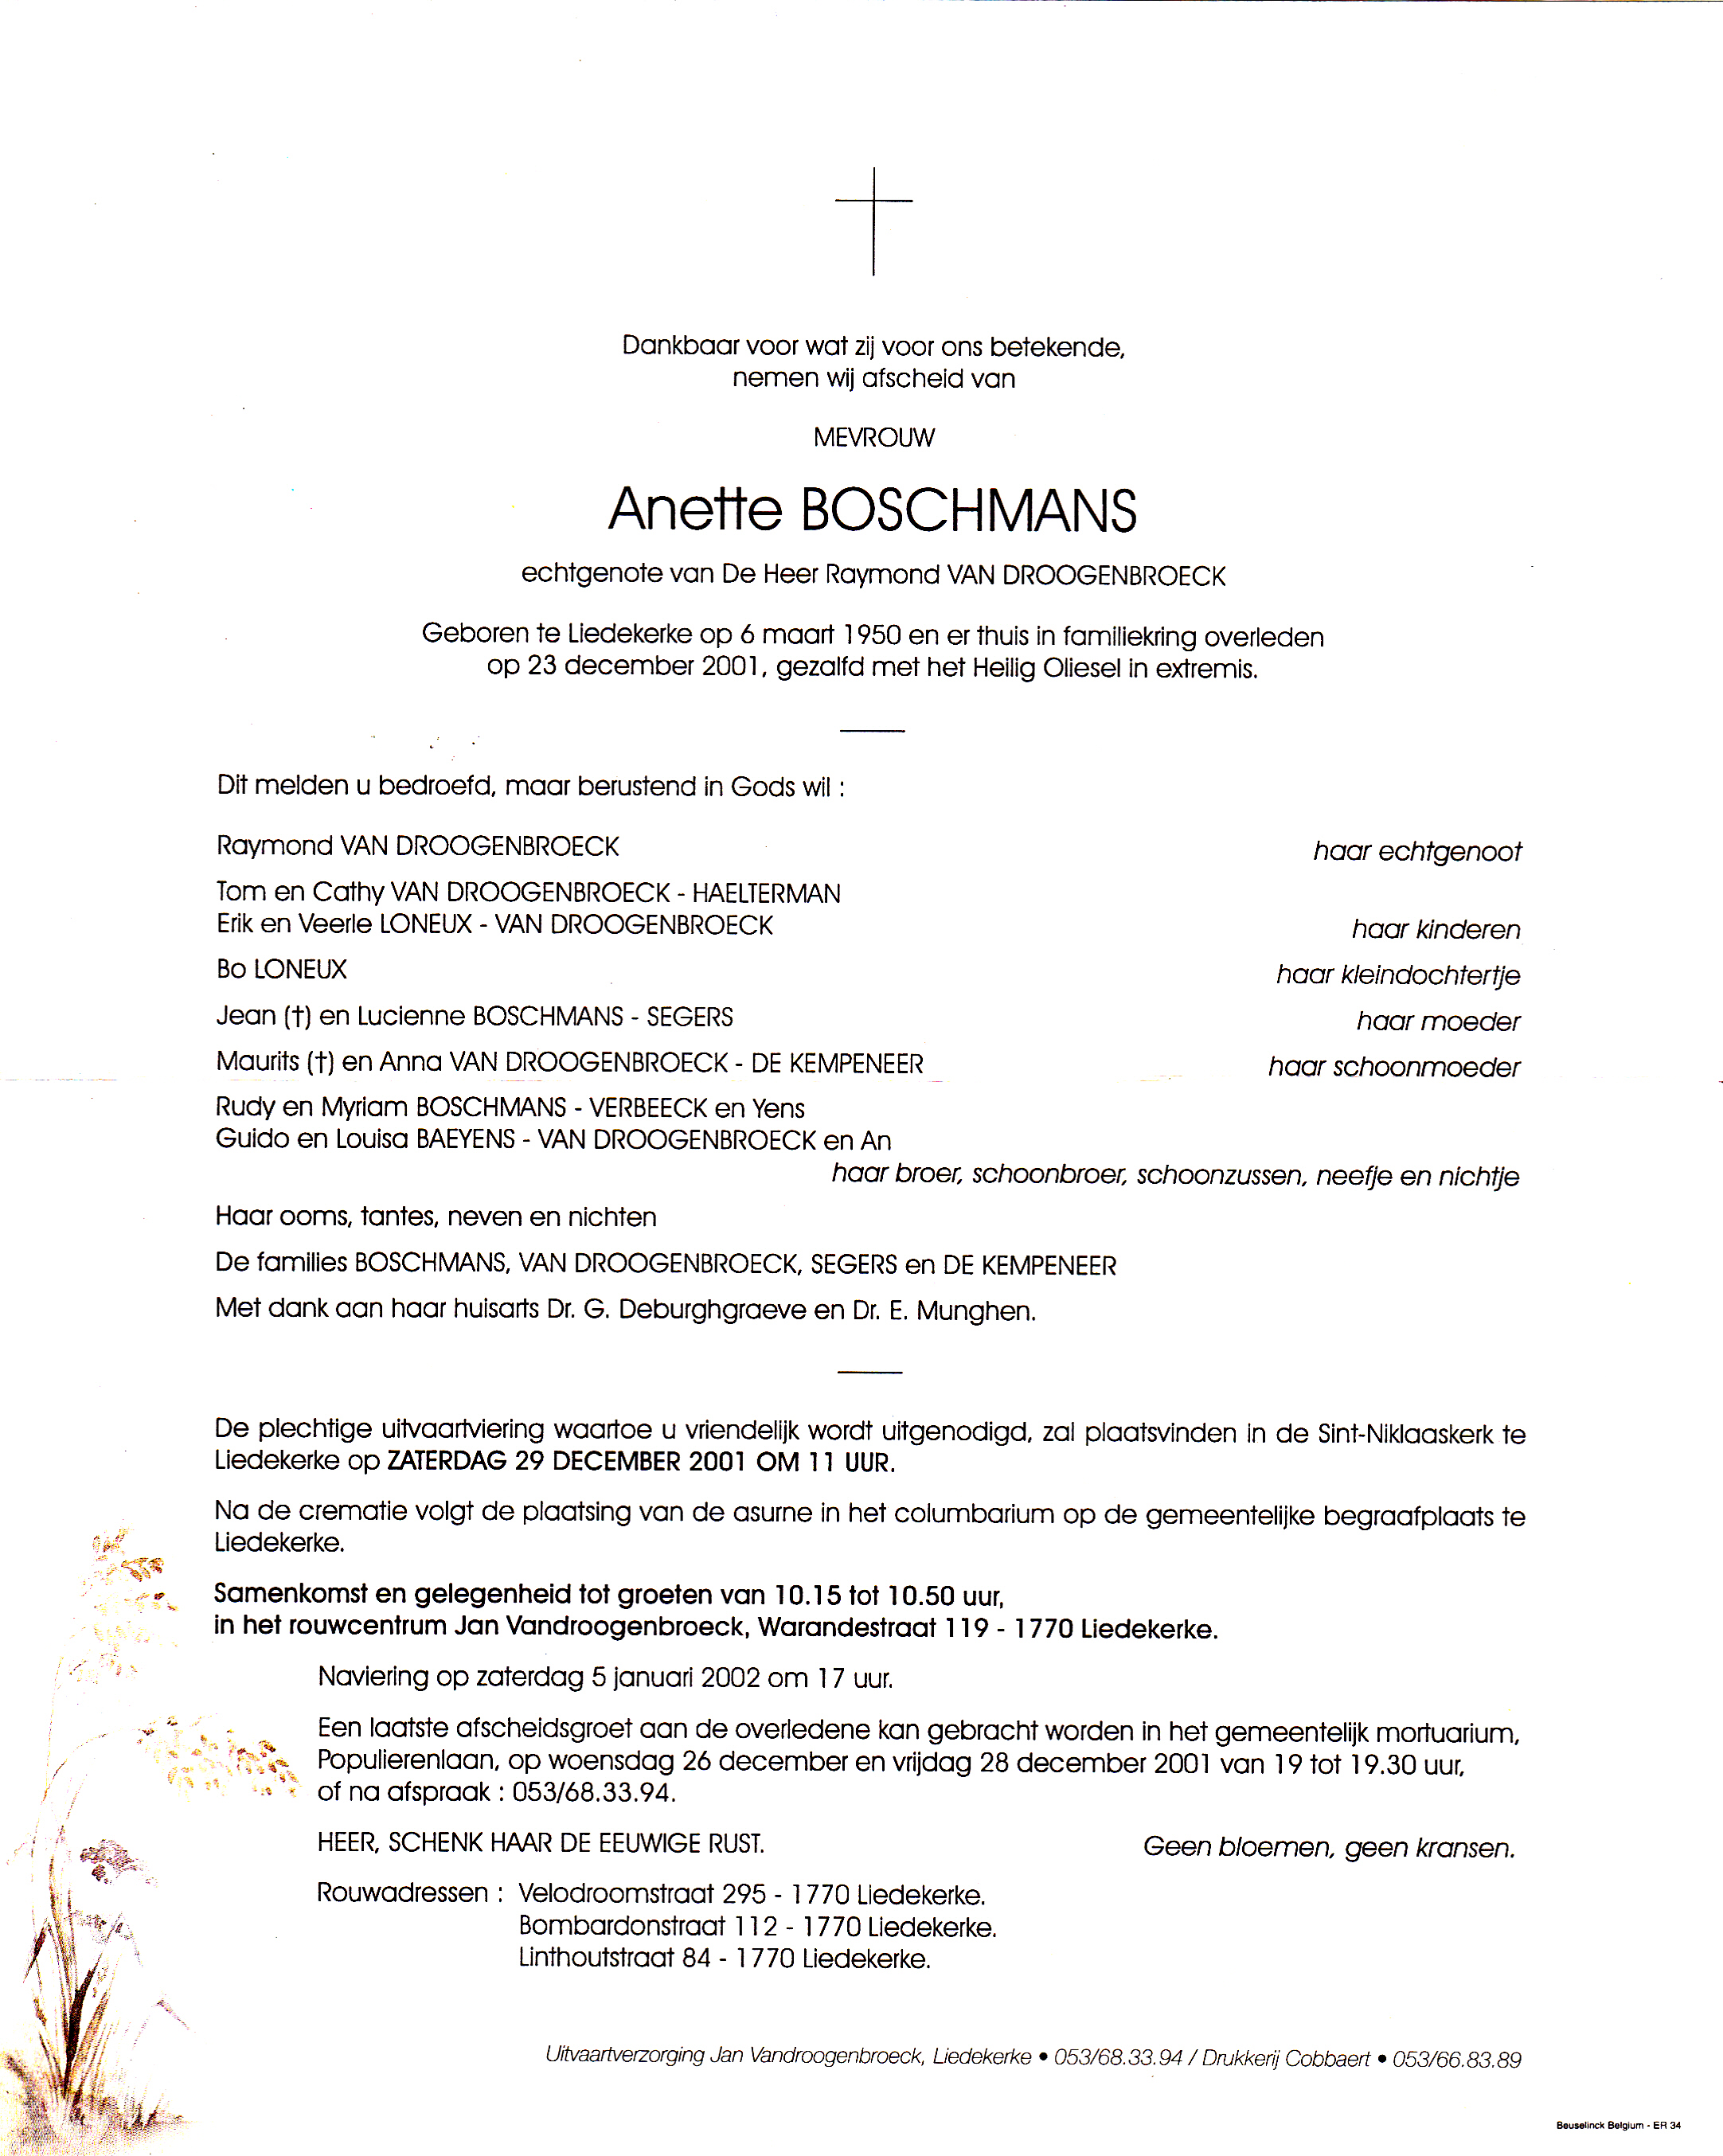 Boschmans Anette  